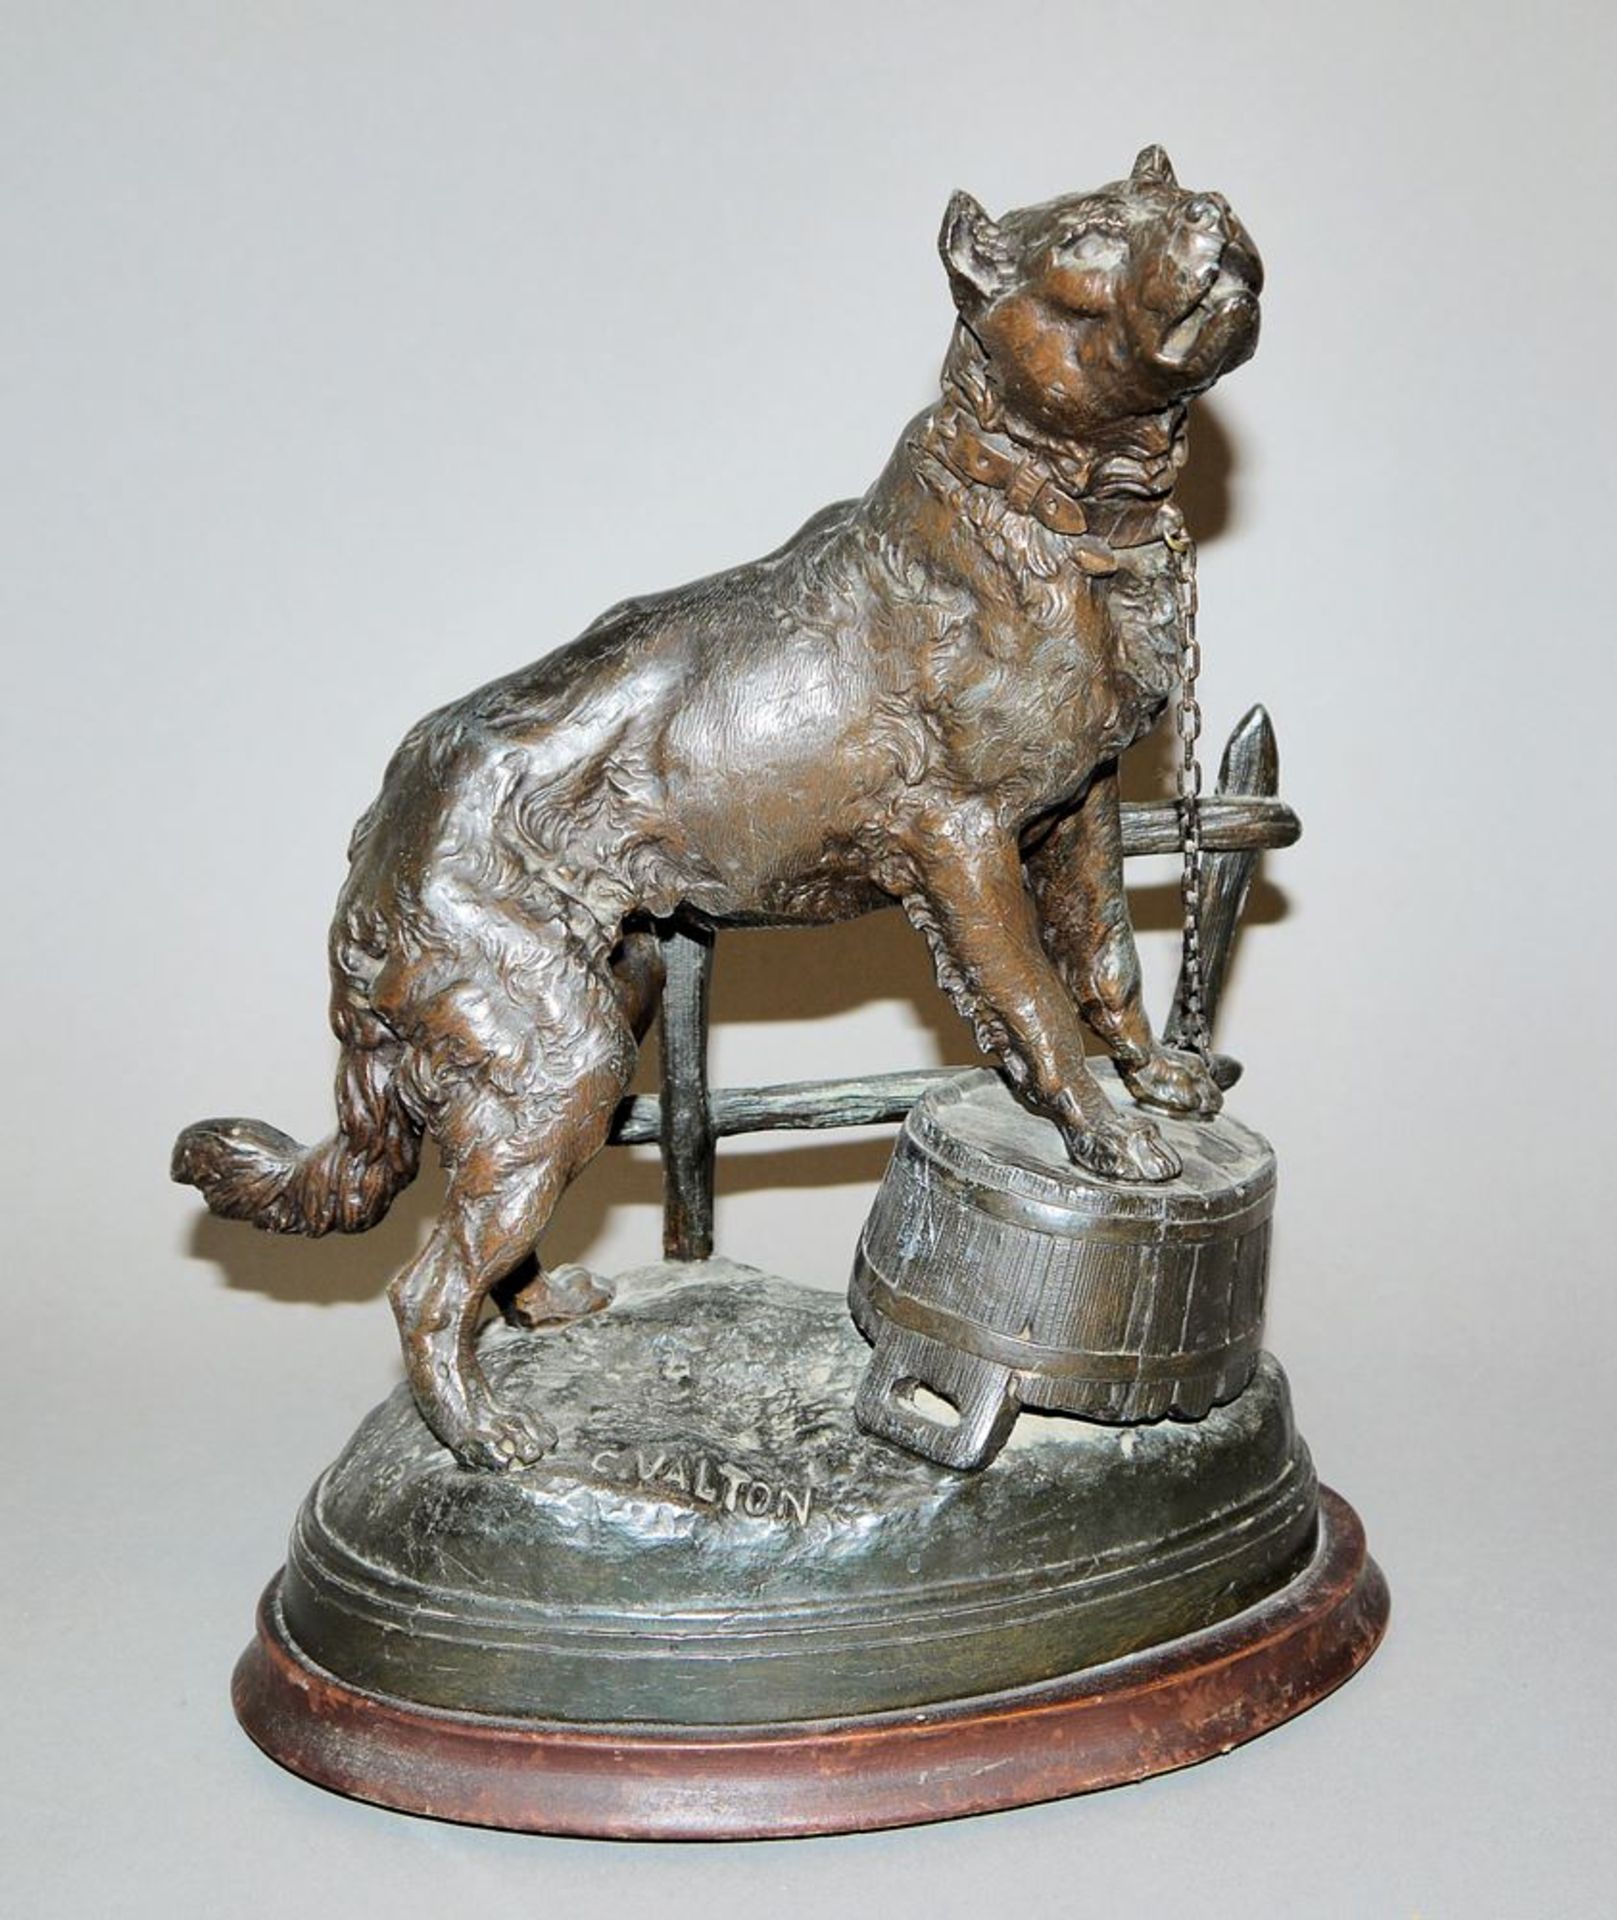 Charles Valton, Kettenhund, Reguleplastik, Frankreich um 1900